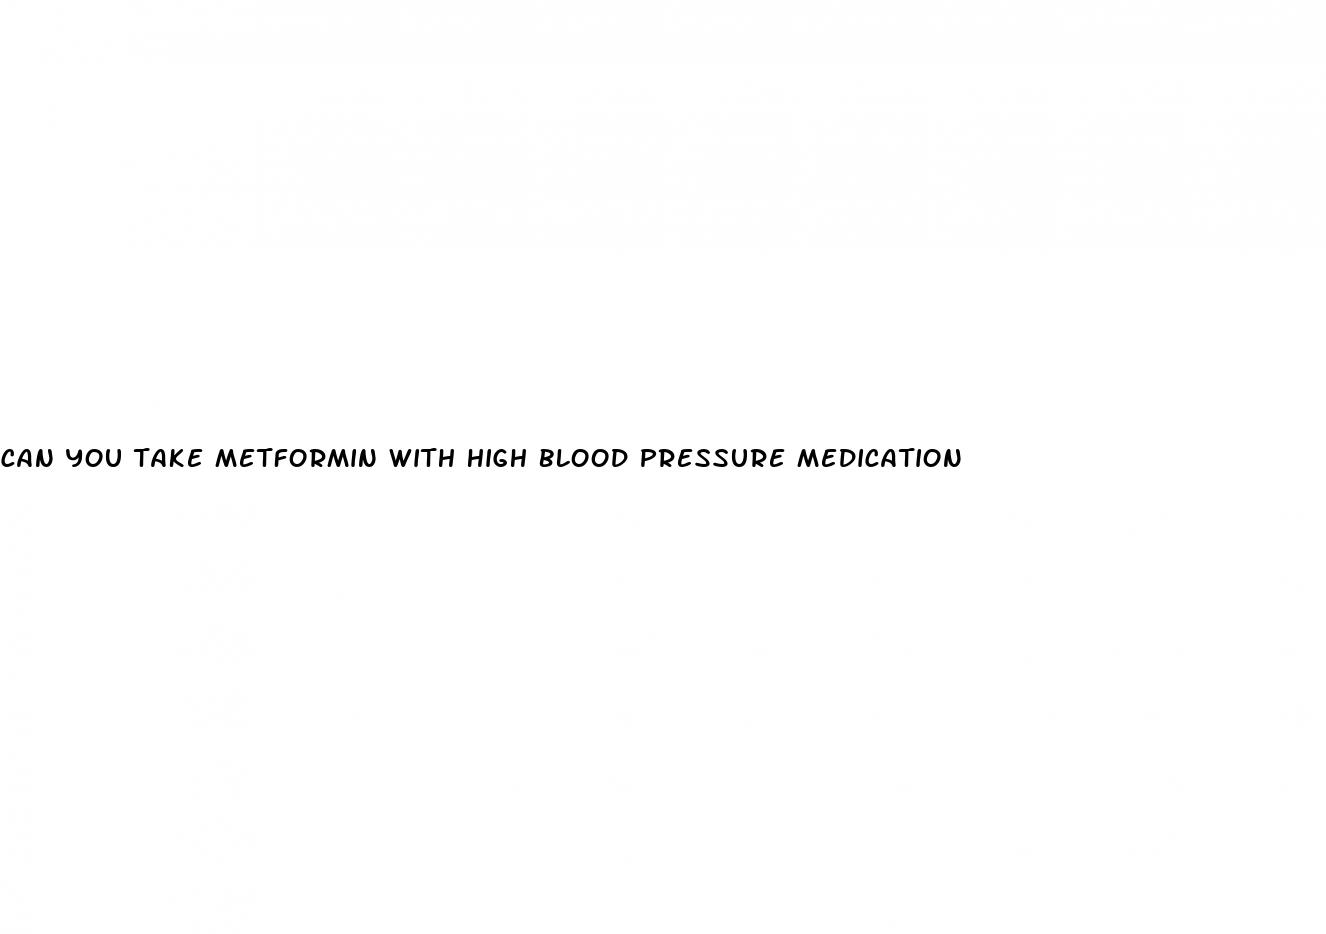 can you take metformin with high blood pressure medication